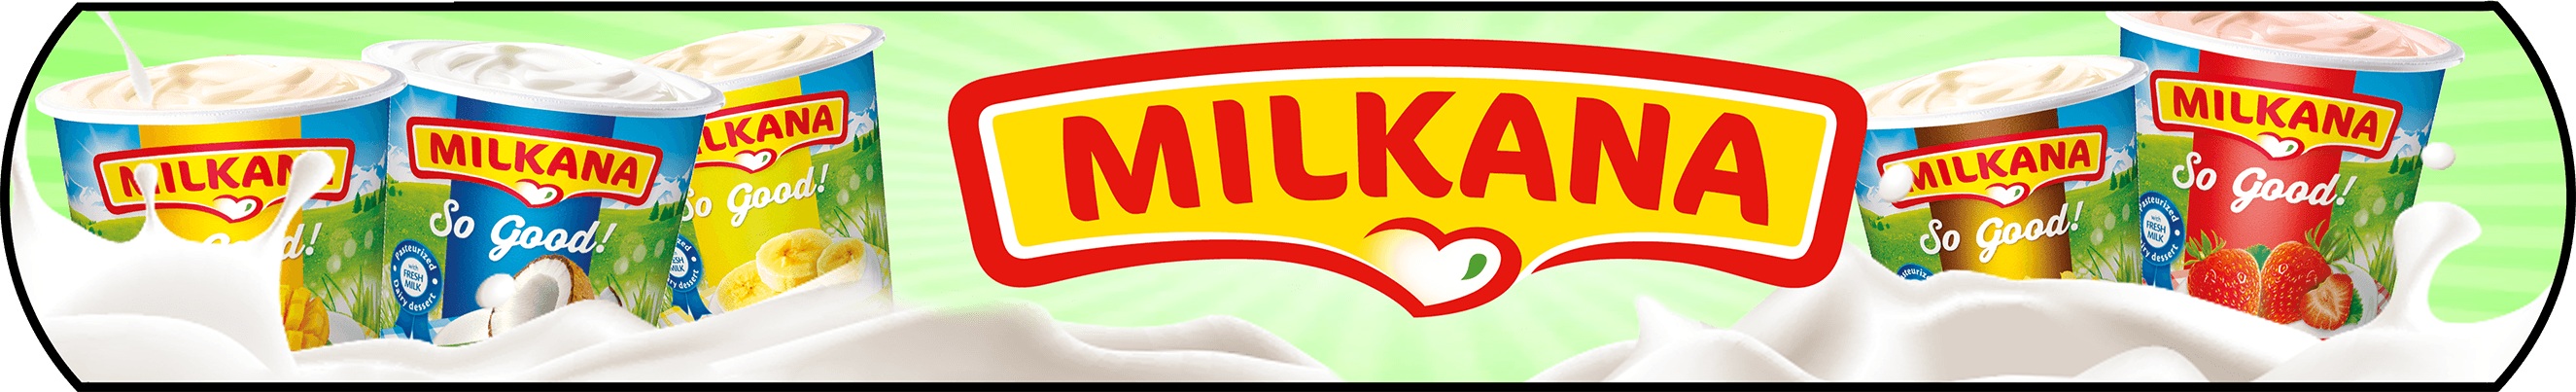 Milkana Banner